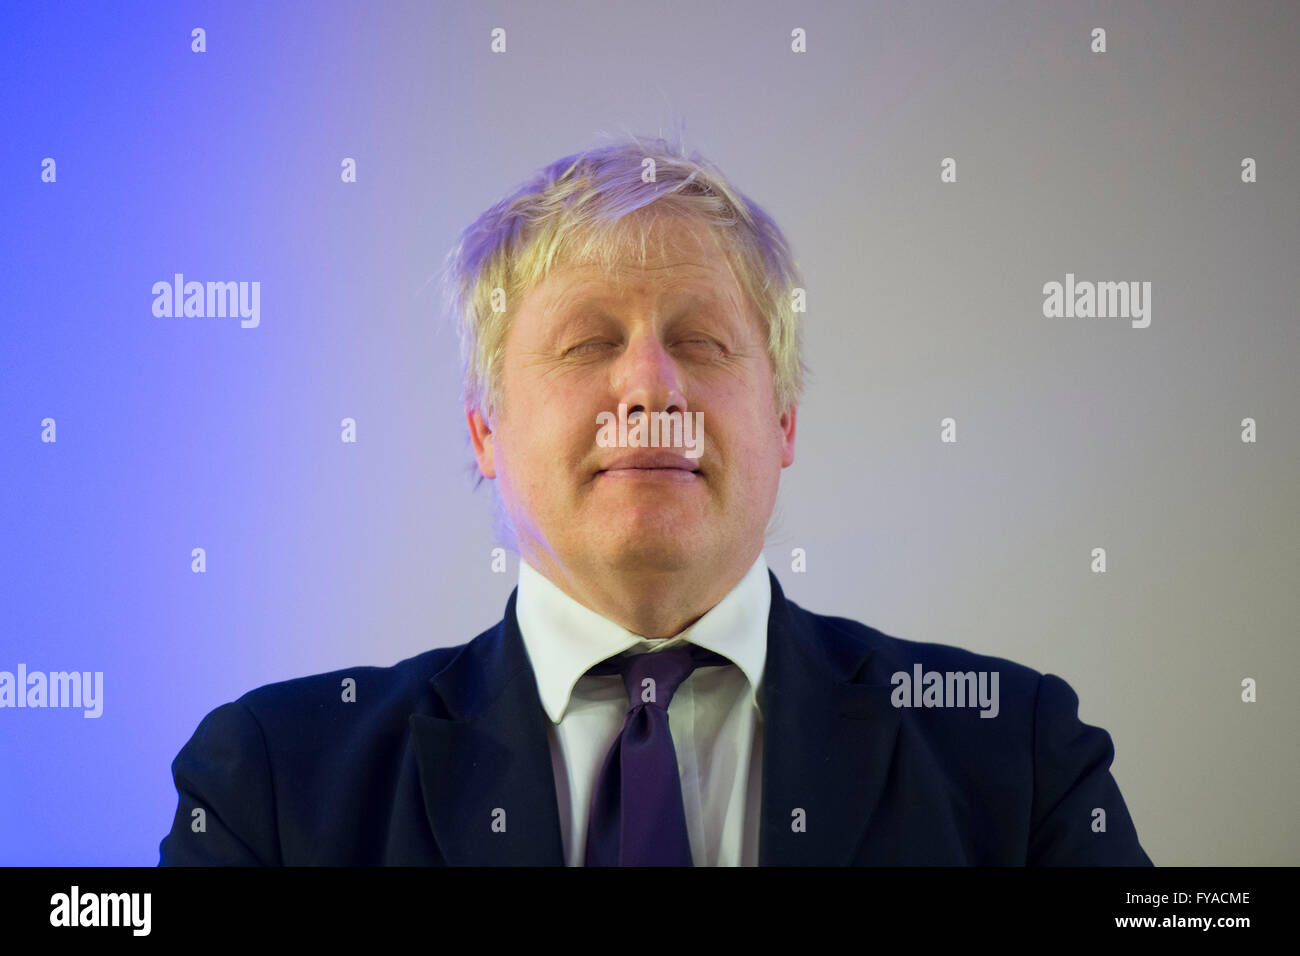 Boris Johnson former Mayor of London and Conservative MP. Stock Photo